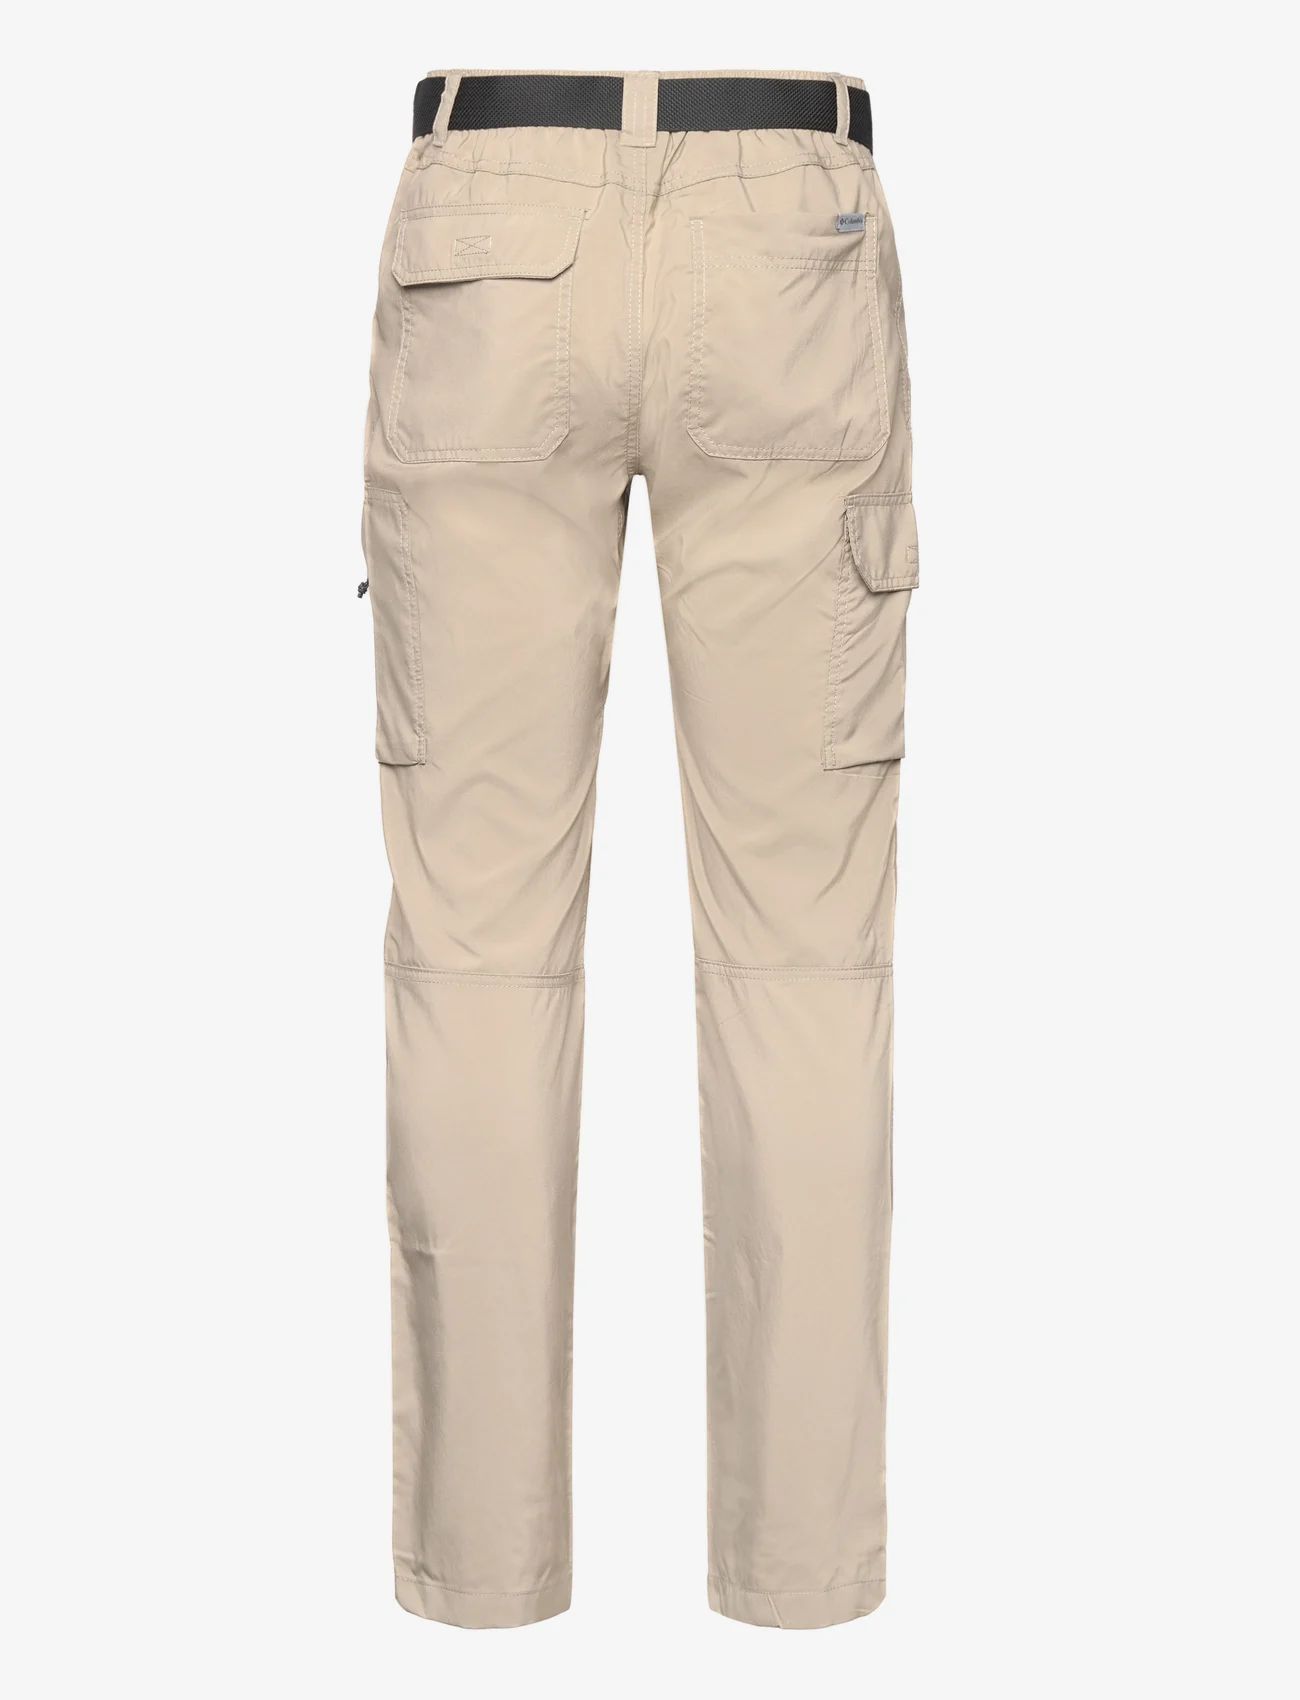 Columbia Sportswear - Silver Ridge Utility Pant - lauko kelnės - tusk - 1